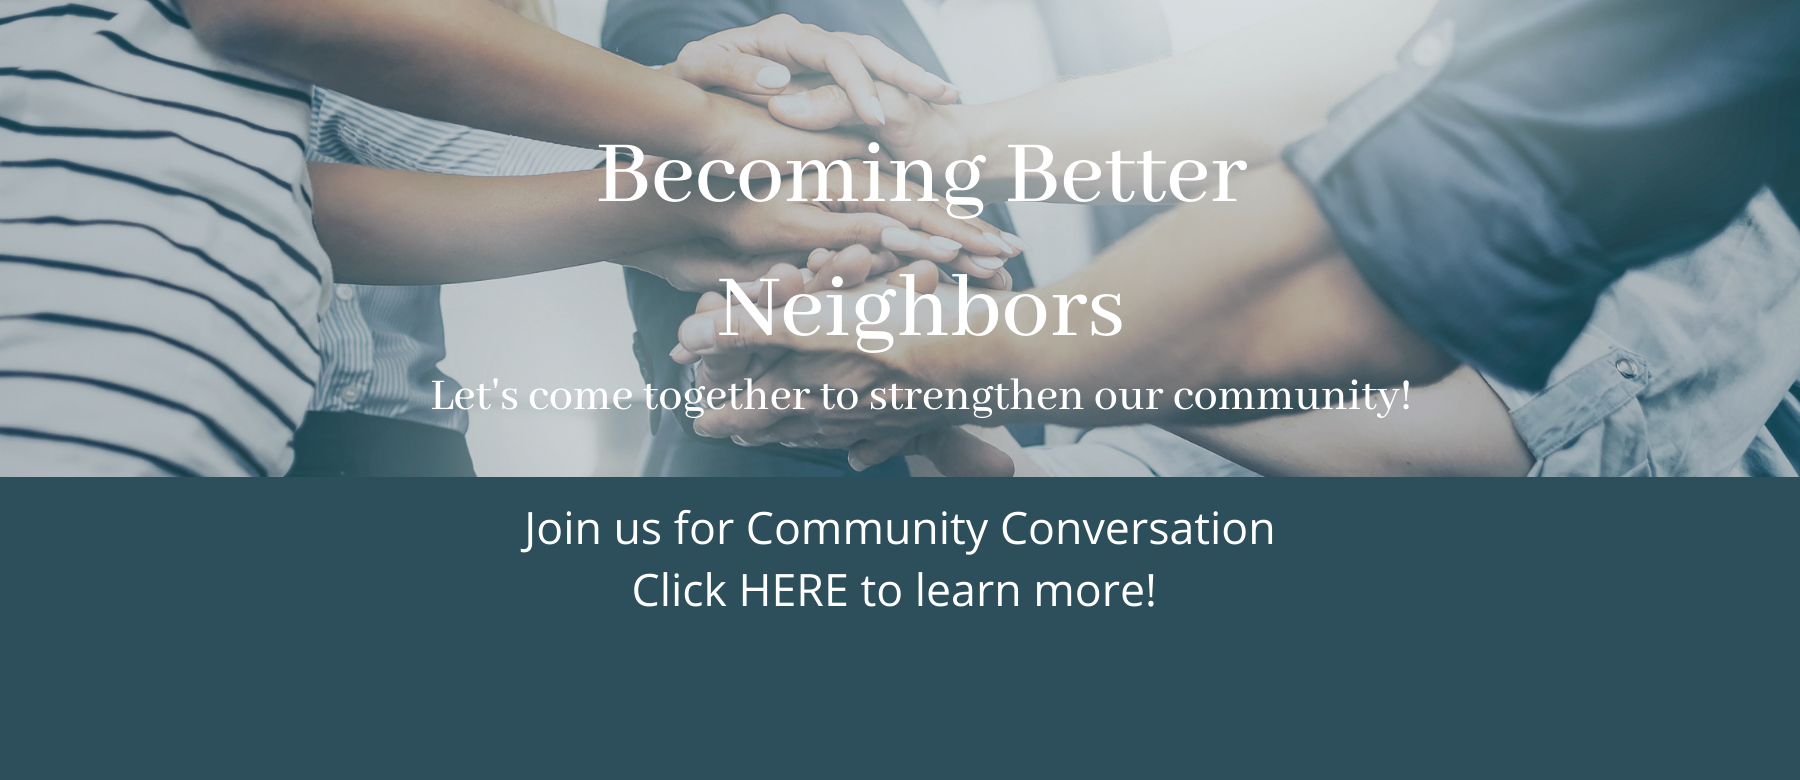 Becoming Better Neighbors